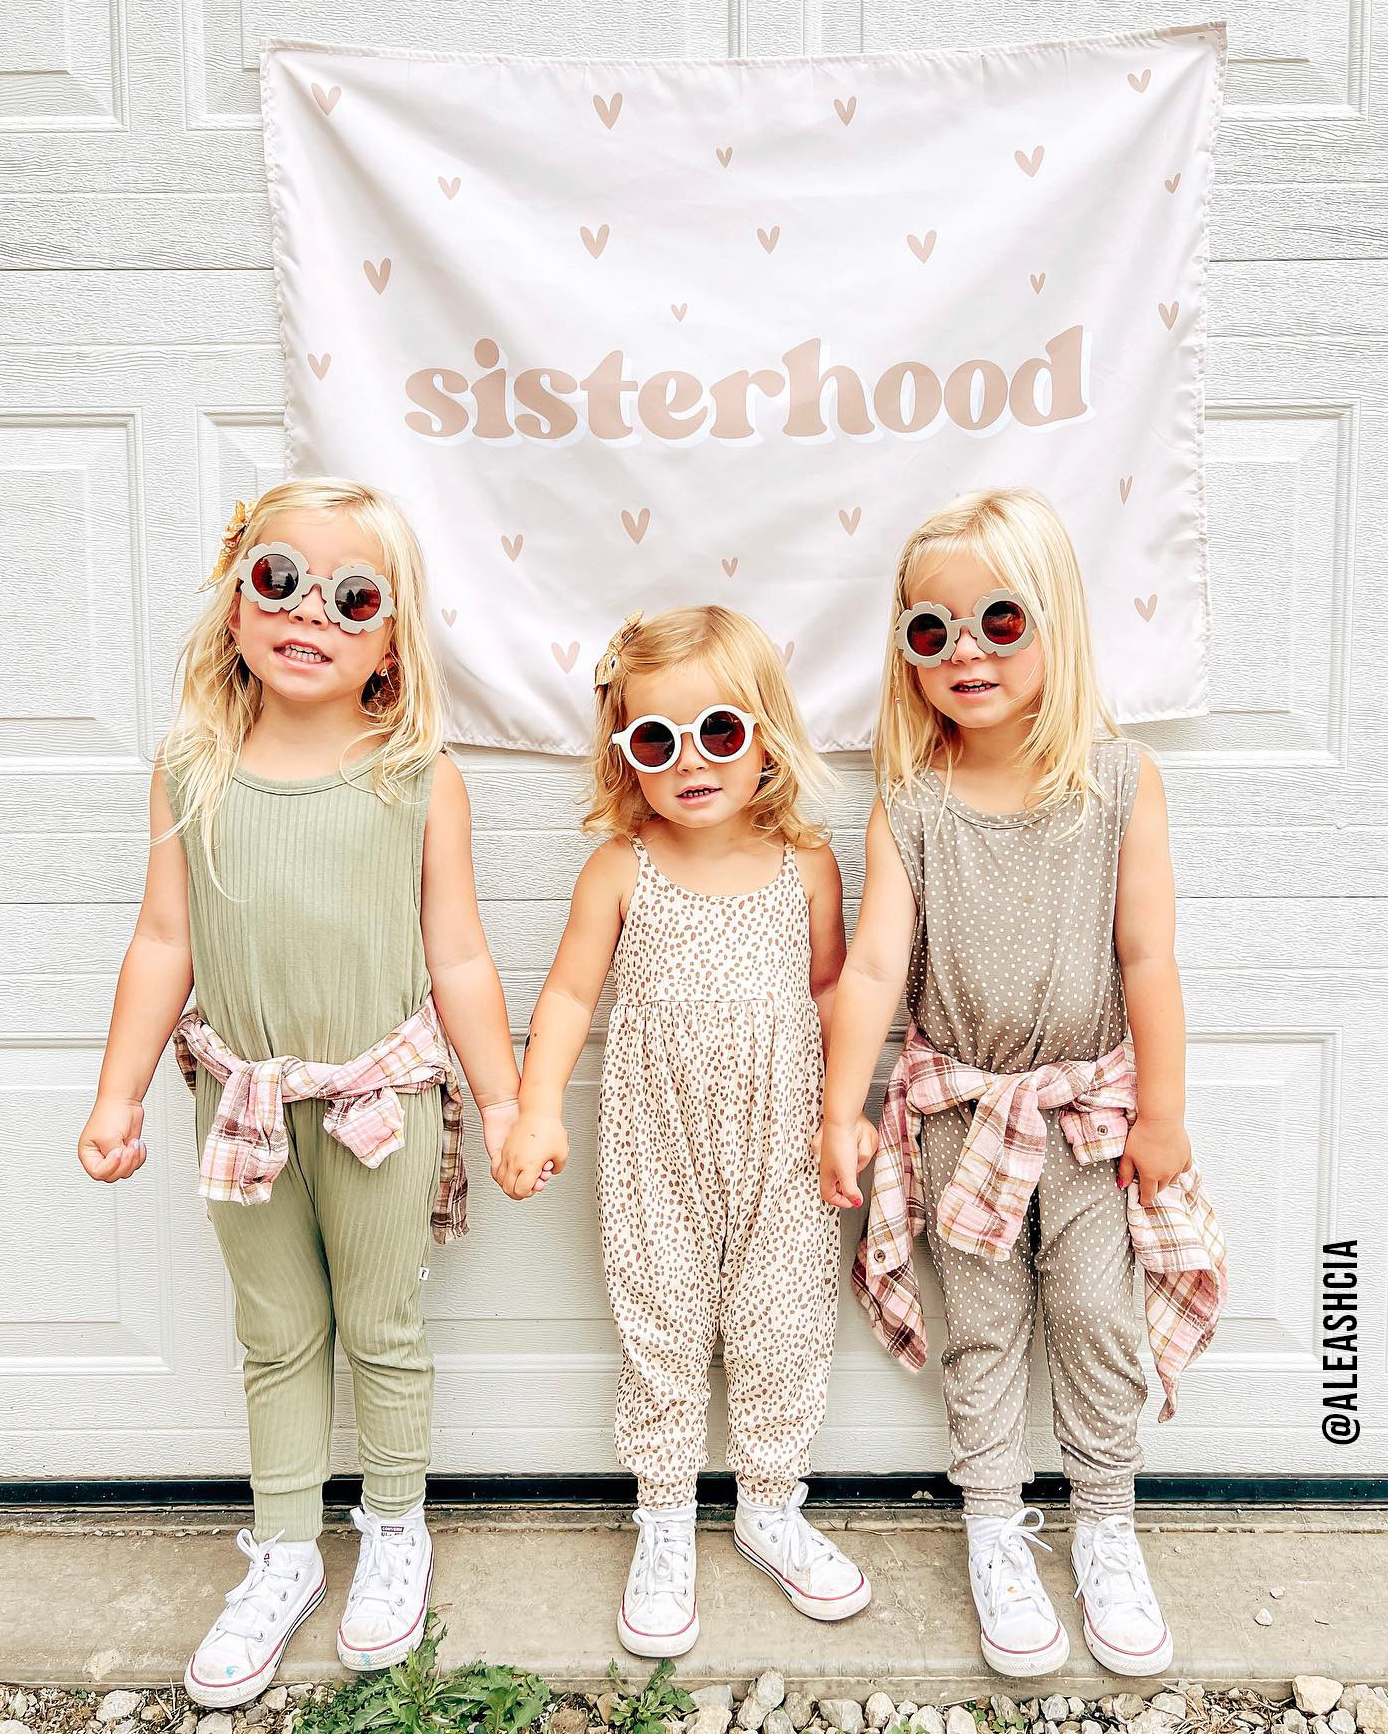 Sisterhood Banner